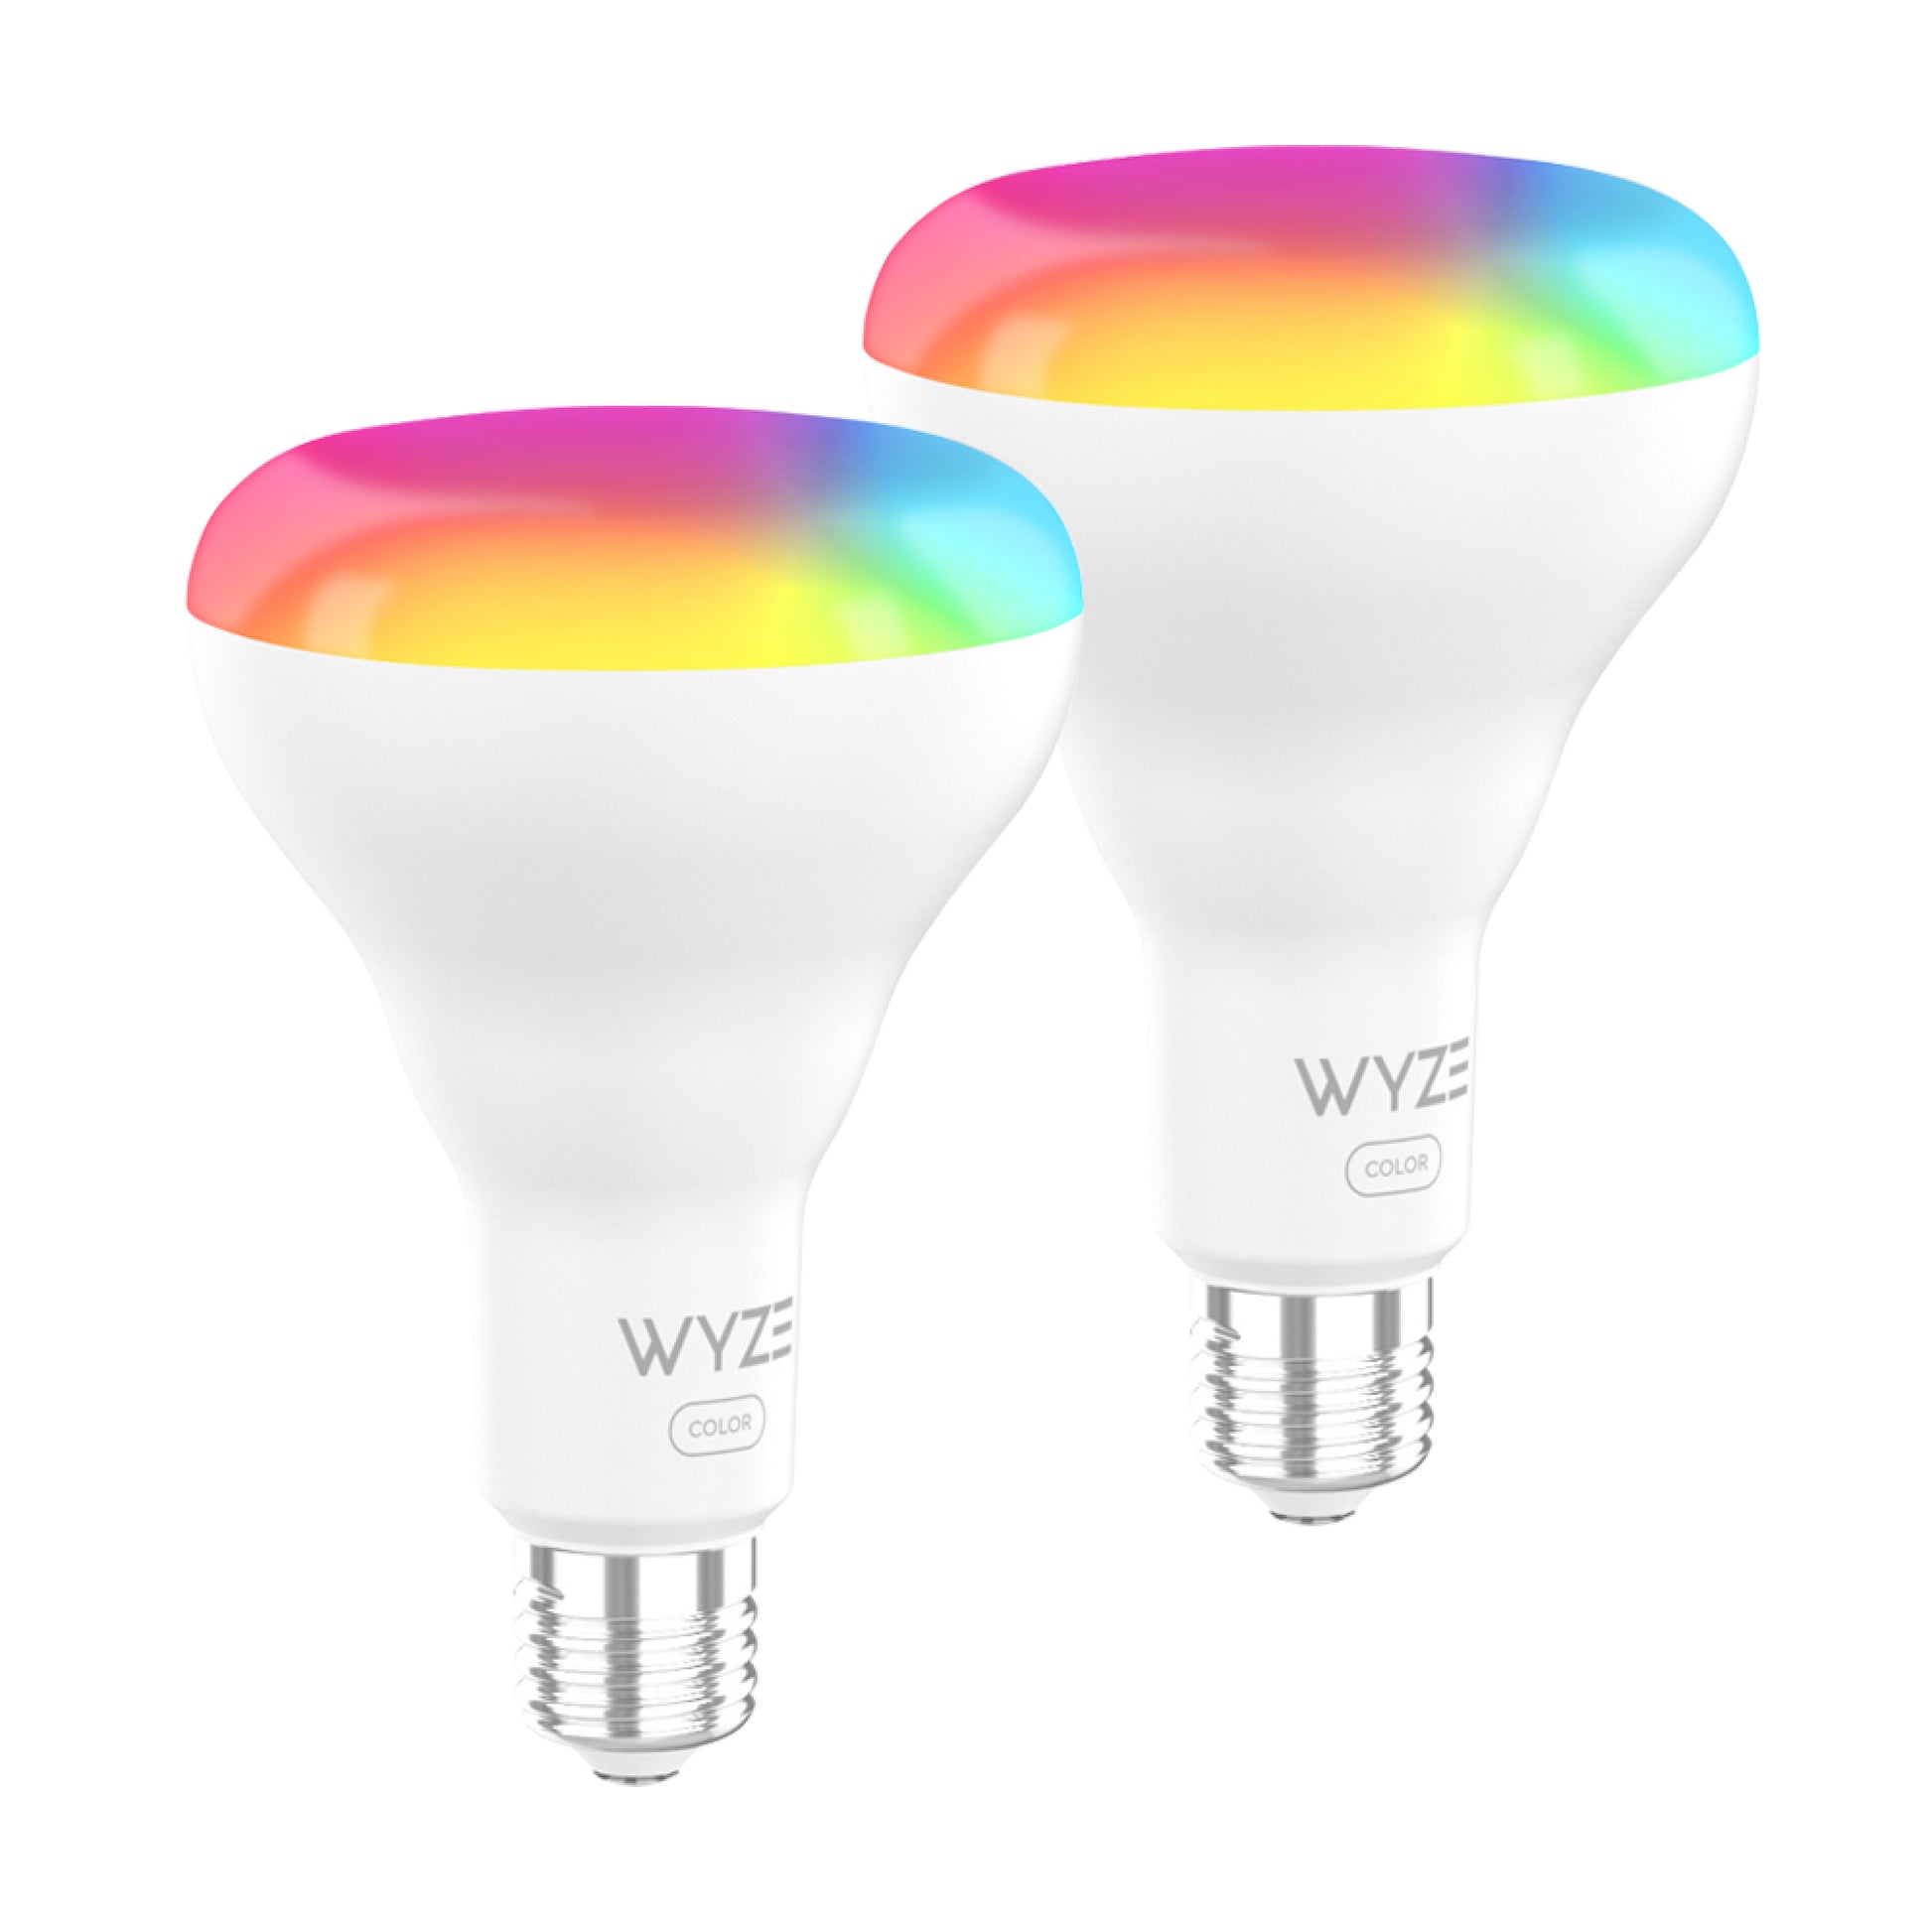 Wyze Lamp Socket Starter Kit Review